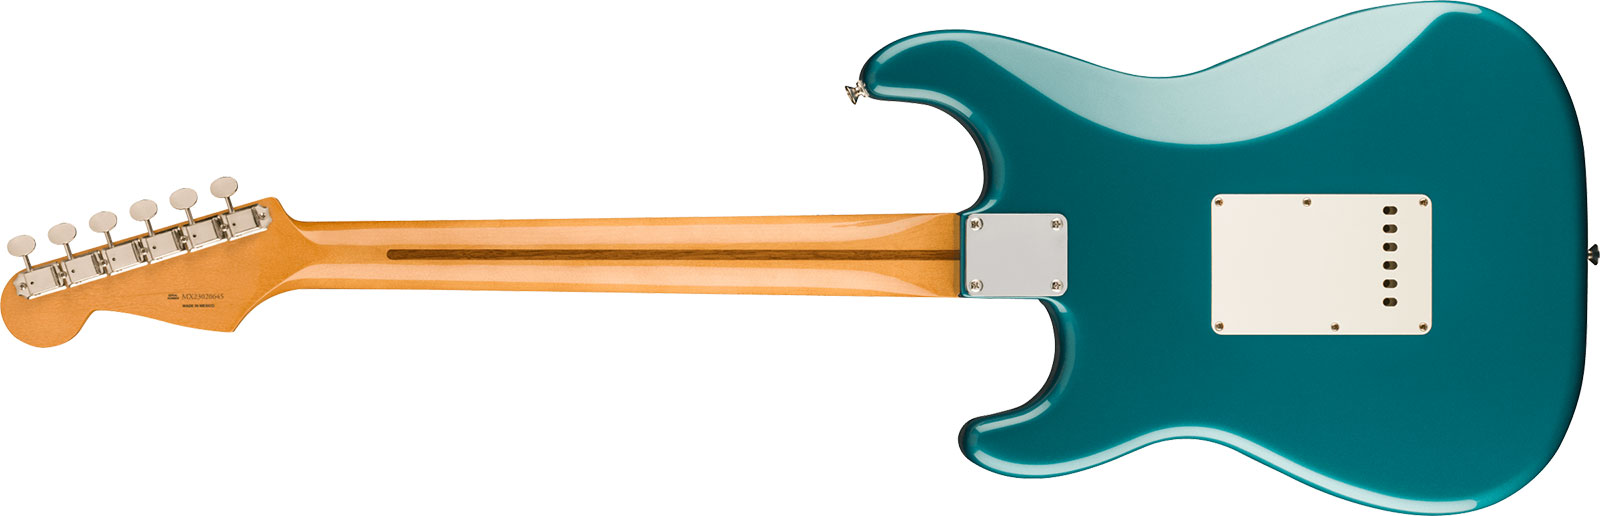 Fender Strat 50s Vintera 2 Mex 3s Trem Mn - Ocean Turquoise - Guitarra eléctrica con forma de str. - Variation 1